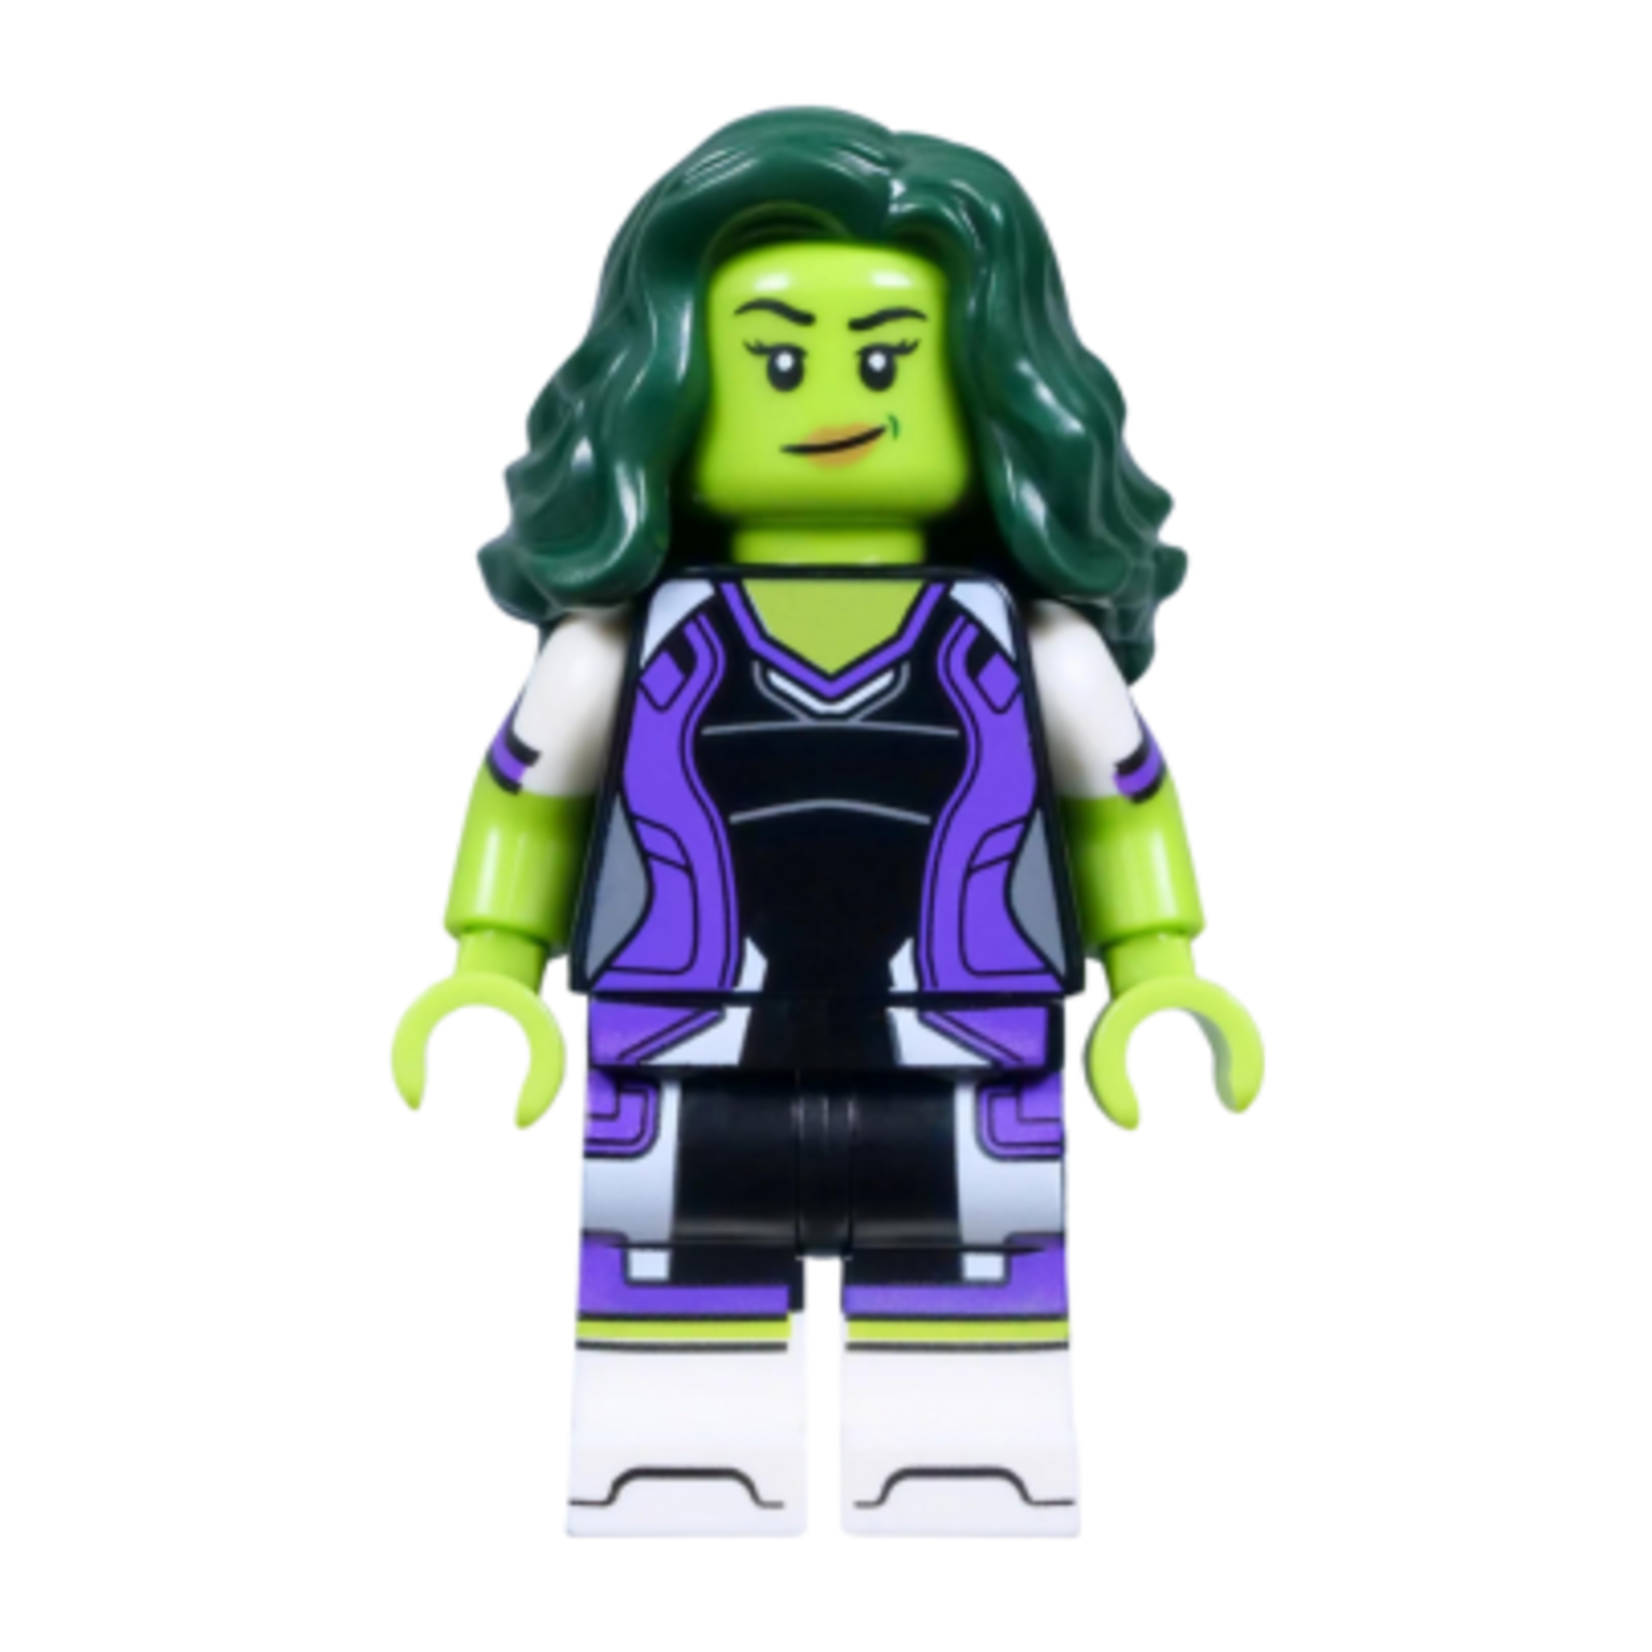 LEGO LEGO Minifigures Marvel Series 2 71039 - She-Hulk